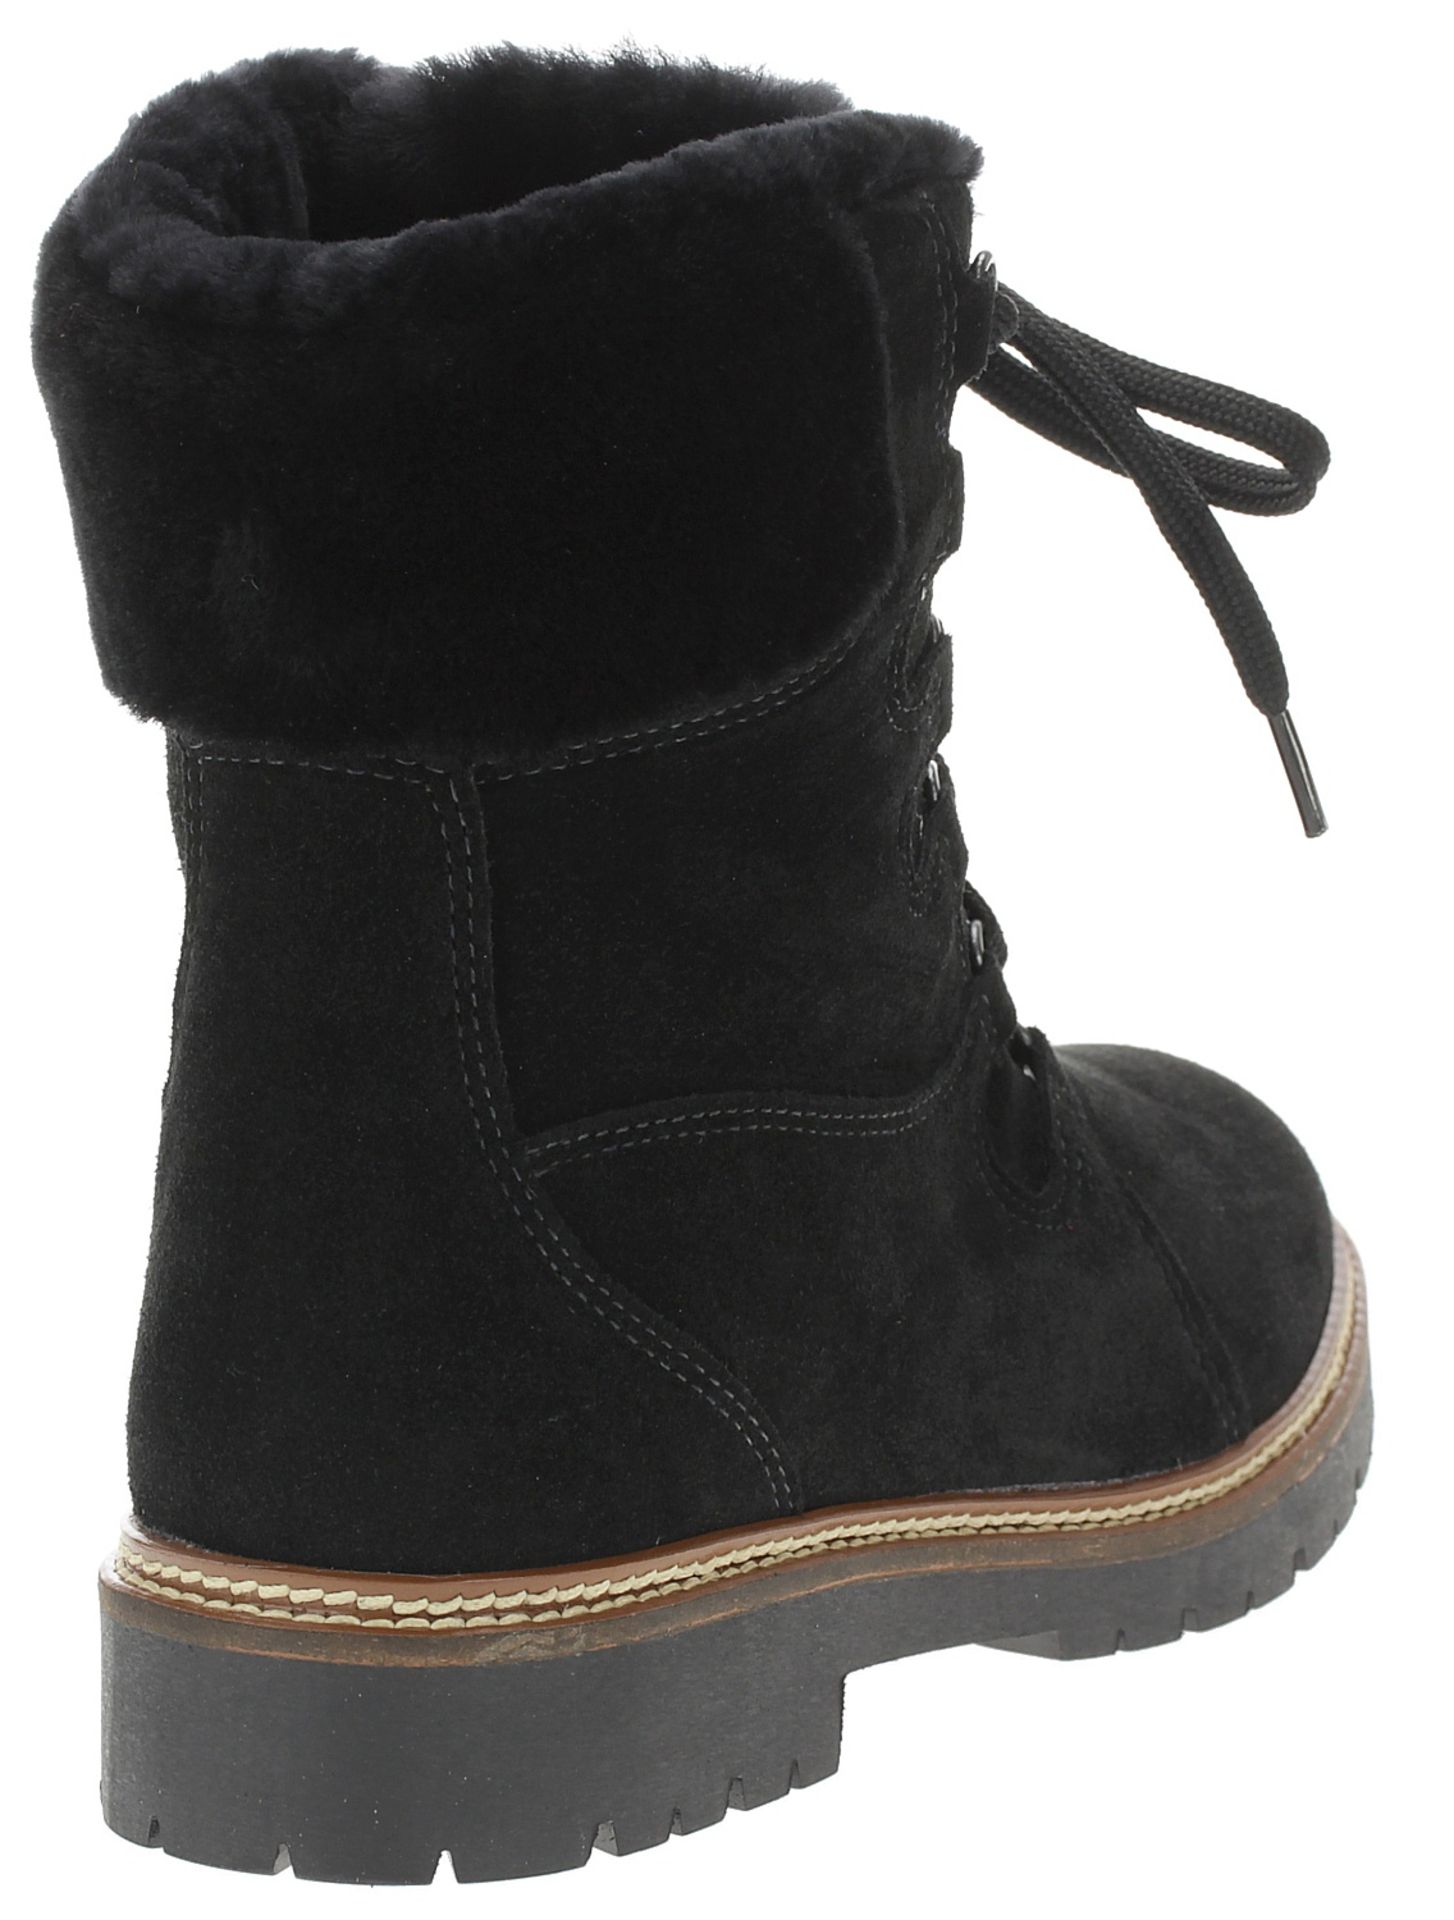 1 x Pair of Designer Olang Meribel 81 Nero Women's Winter Boots - Euro Size 39 - Brand New Boxed - Image 5 of 8